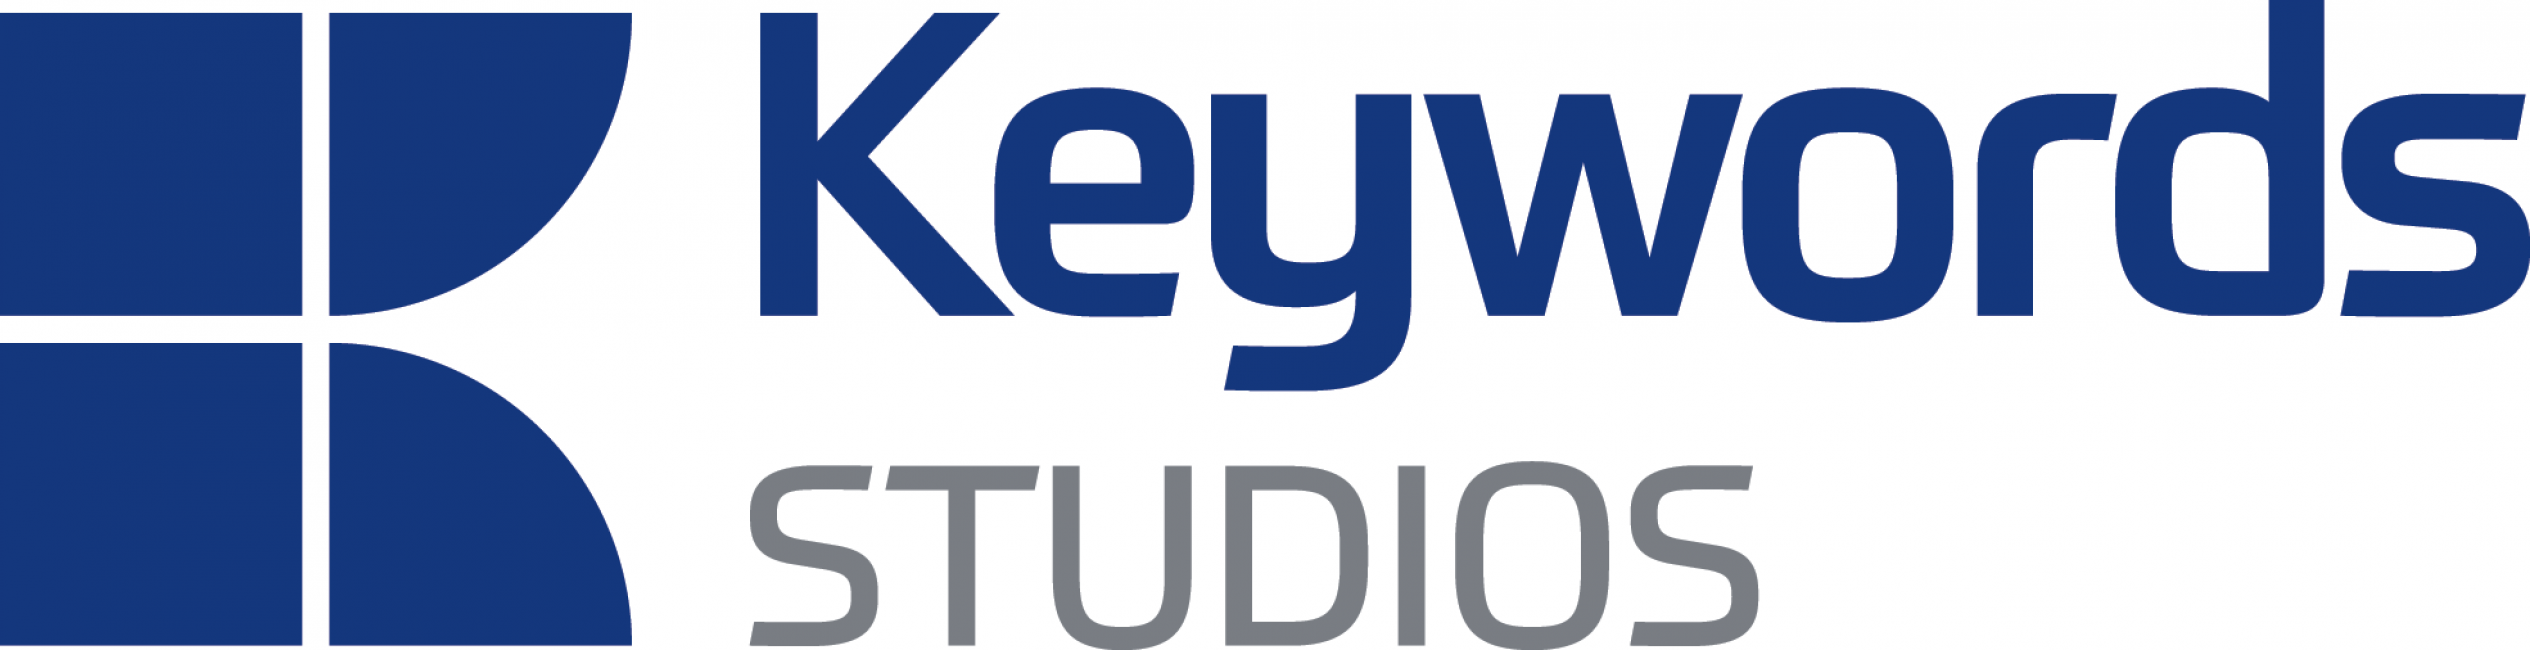 keywords studios acquisitions